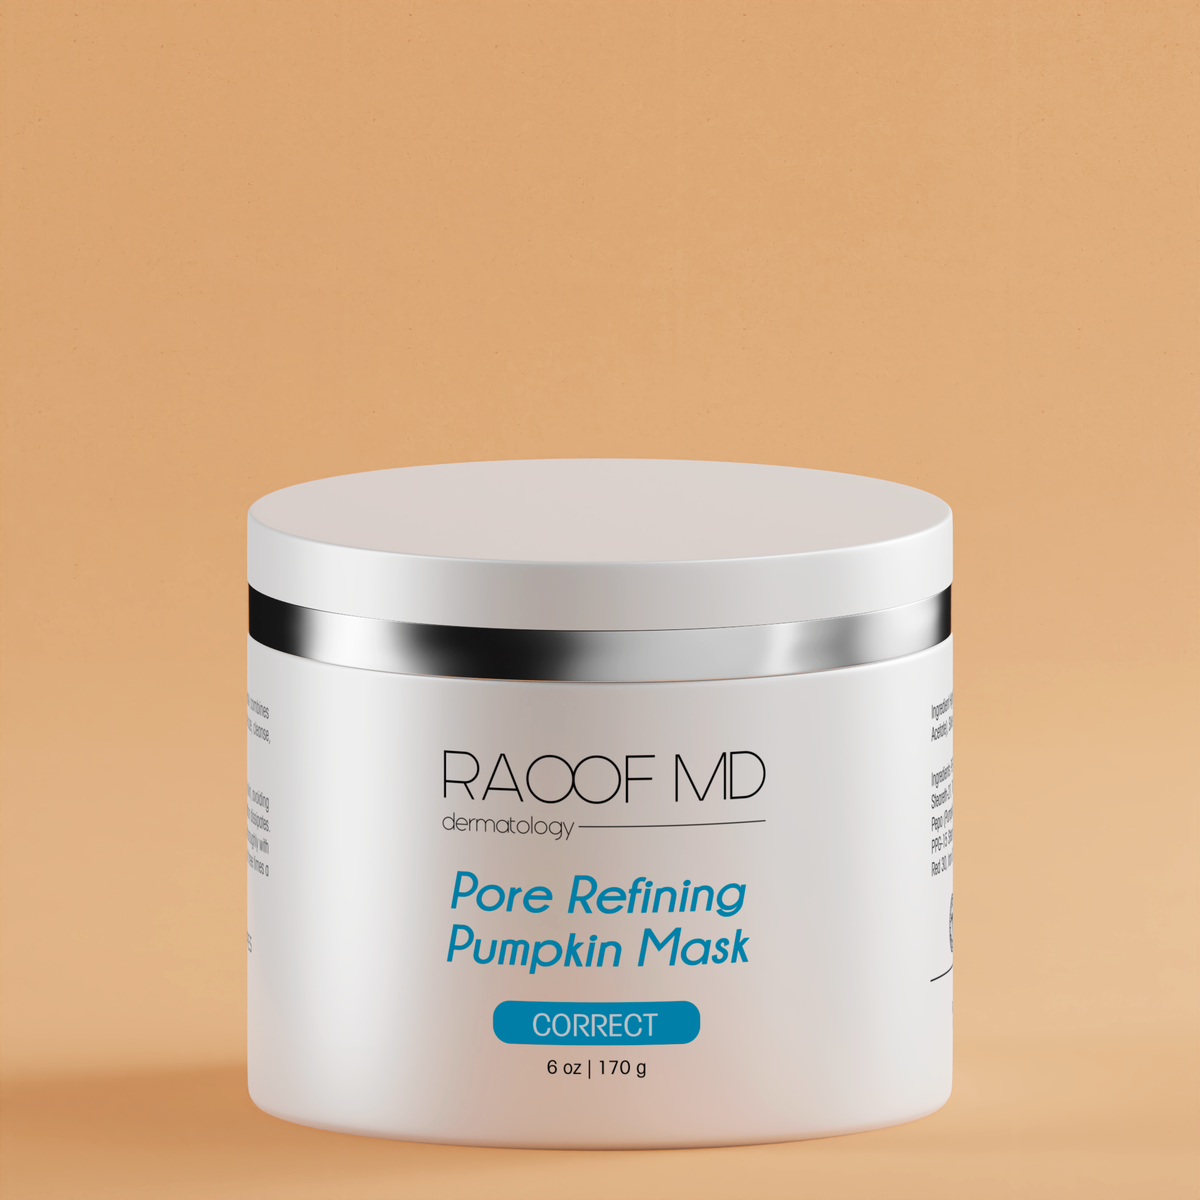 Pore Refining Pumpkin Mask RAOOF MD Dermatology